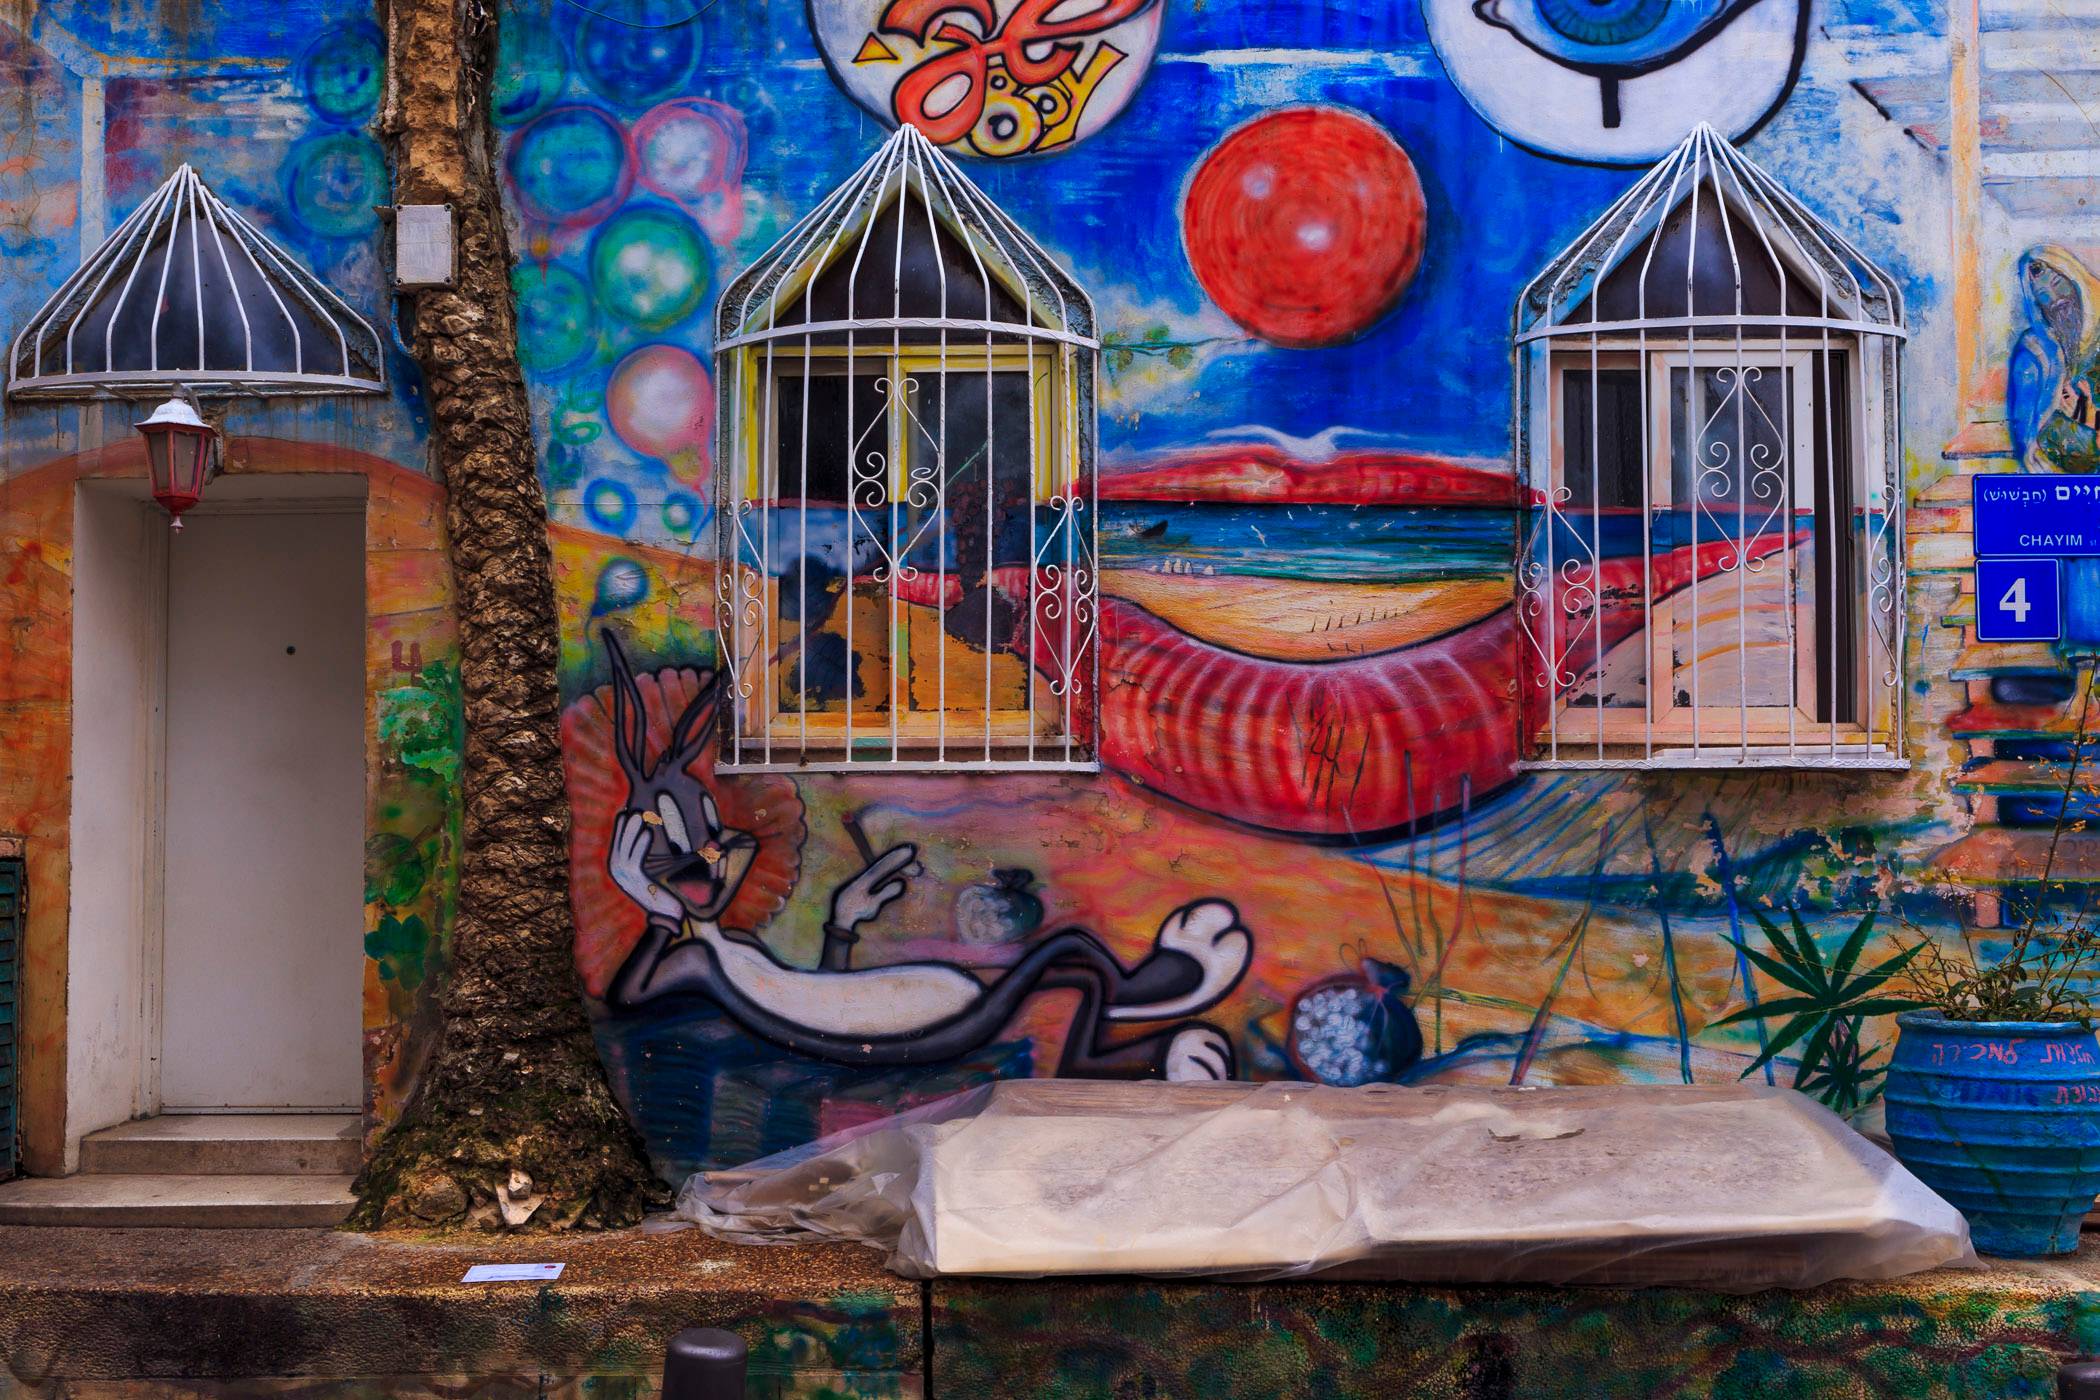 Axeman's Travelfeed #011 - Street art colors of Tel-Aviv